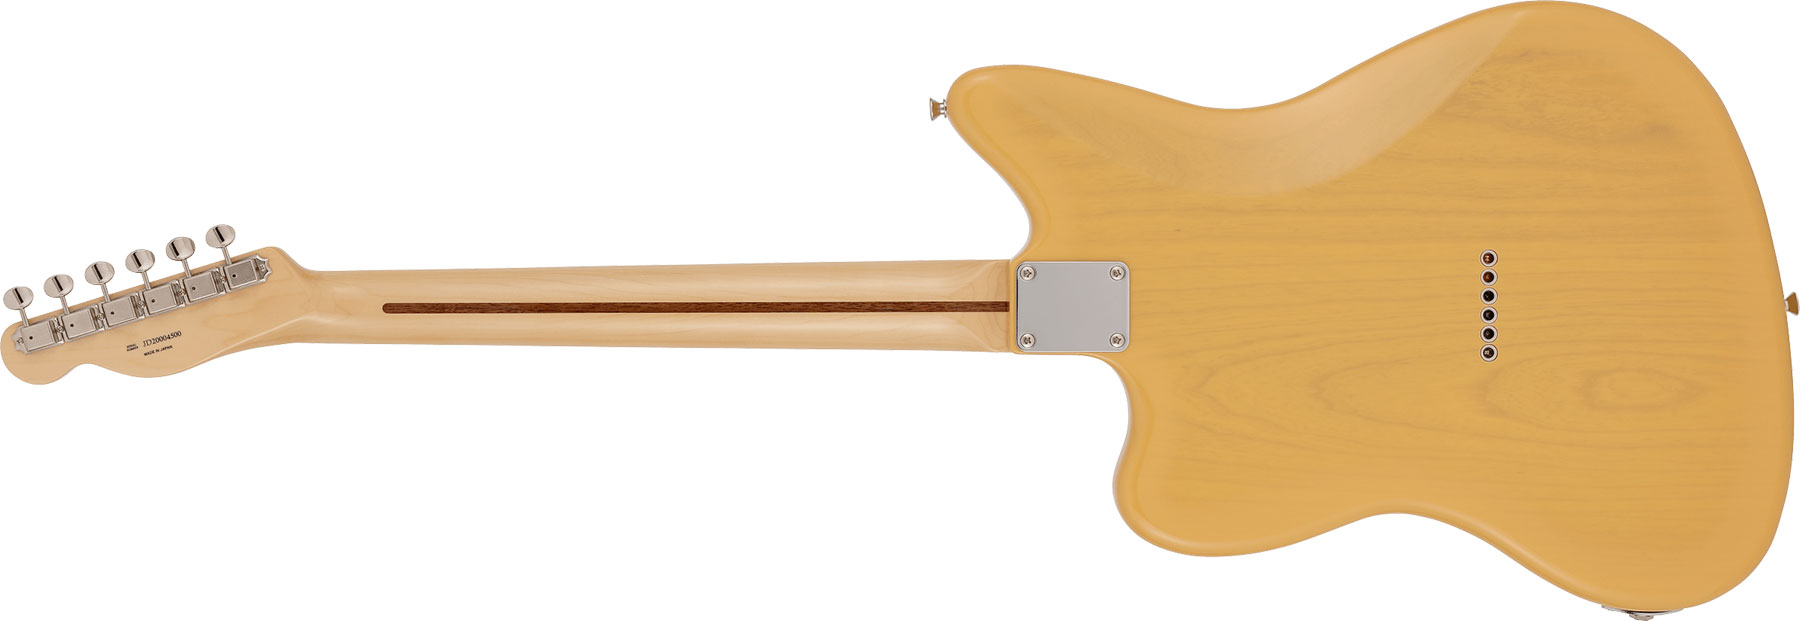 Fender Tele Offset Ltd Jap 2s Ht Mn - Butterscotch Blonde - Retro rock electric guitar - Variation 1